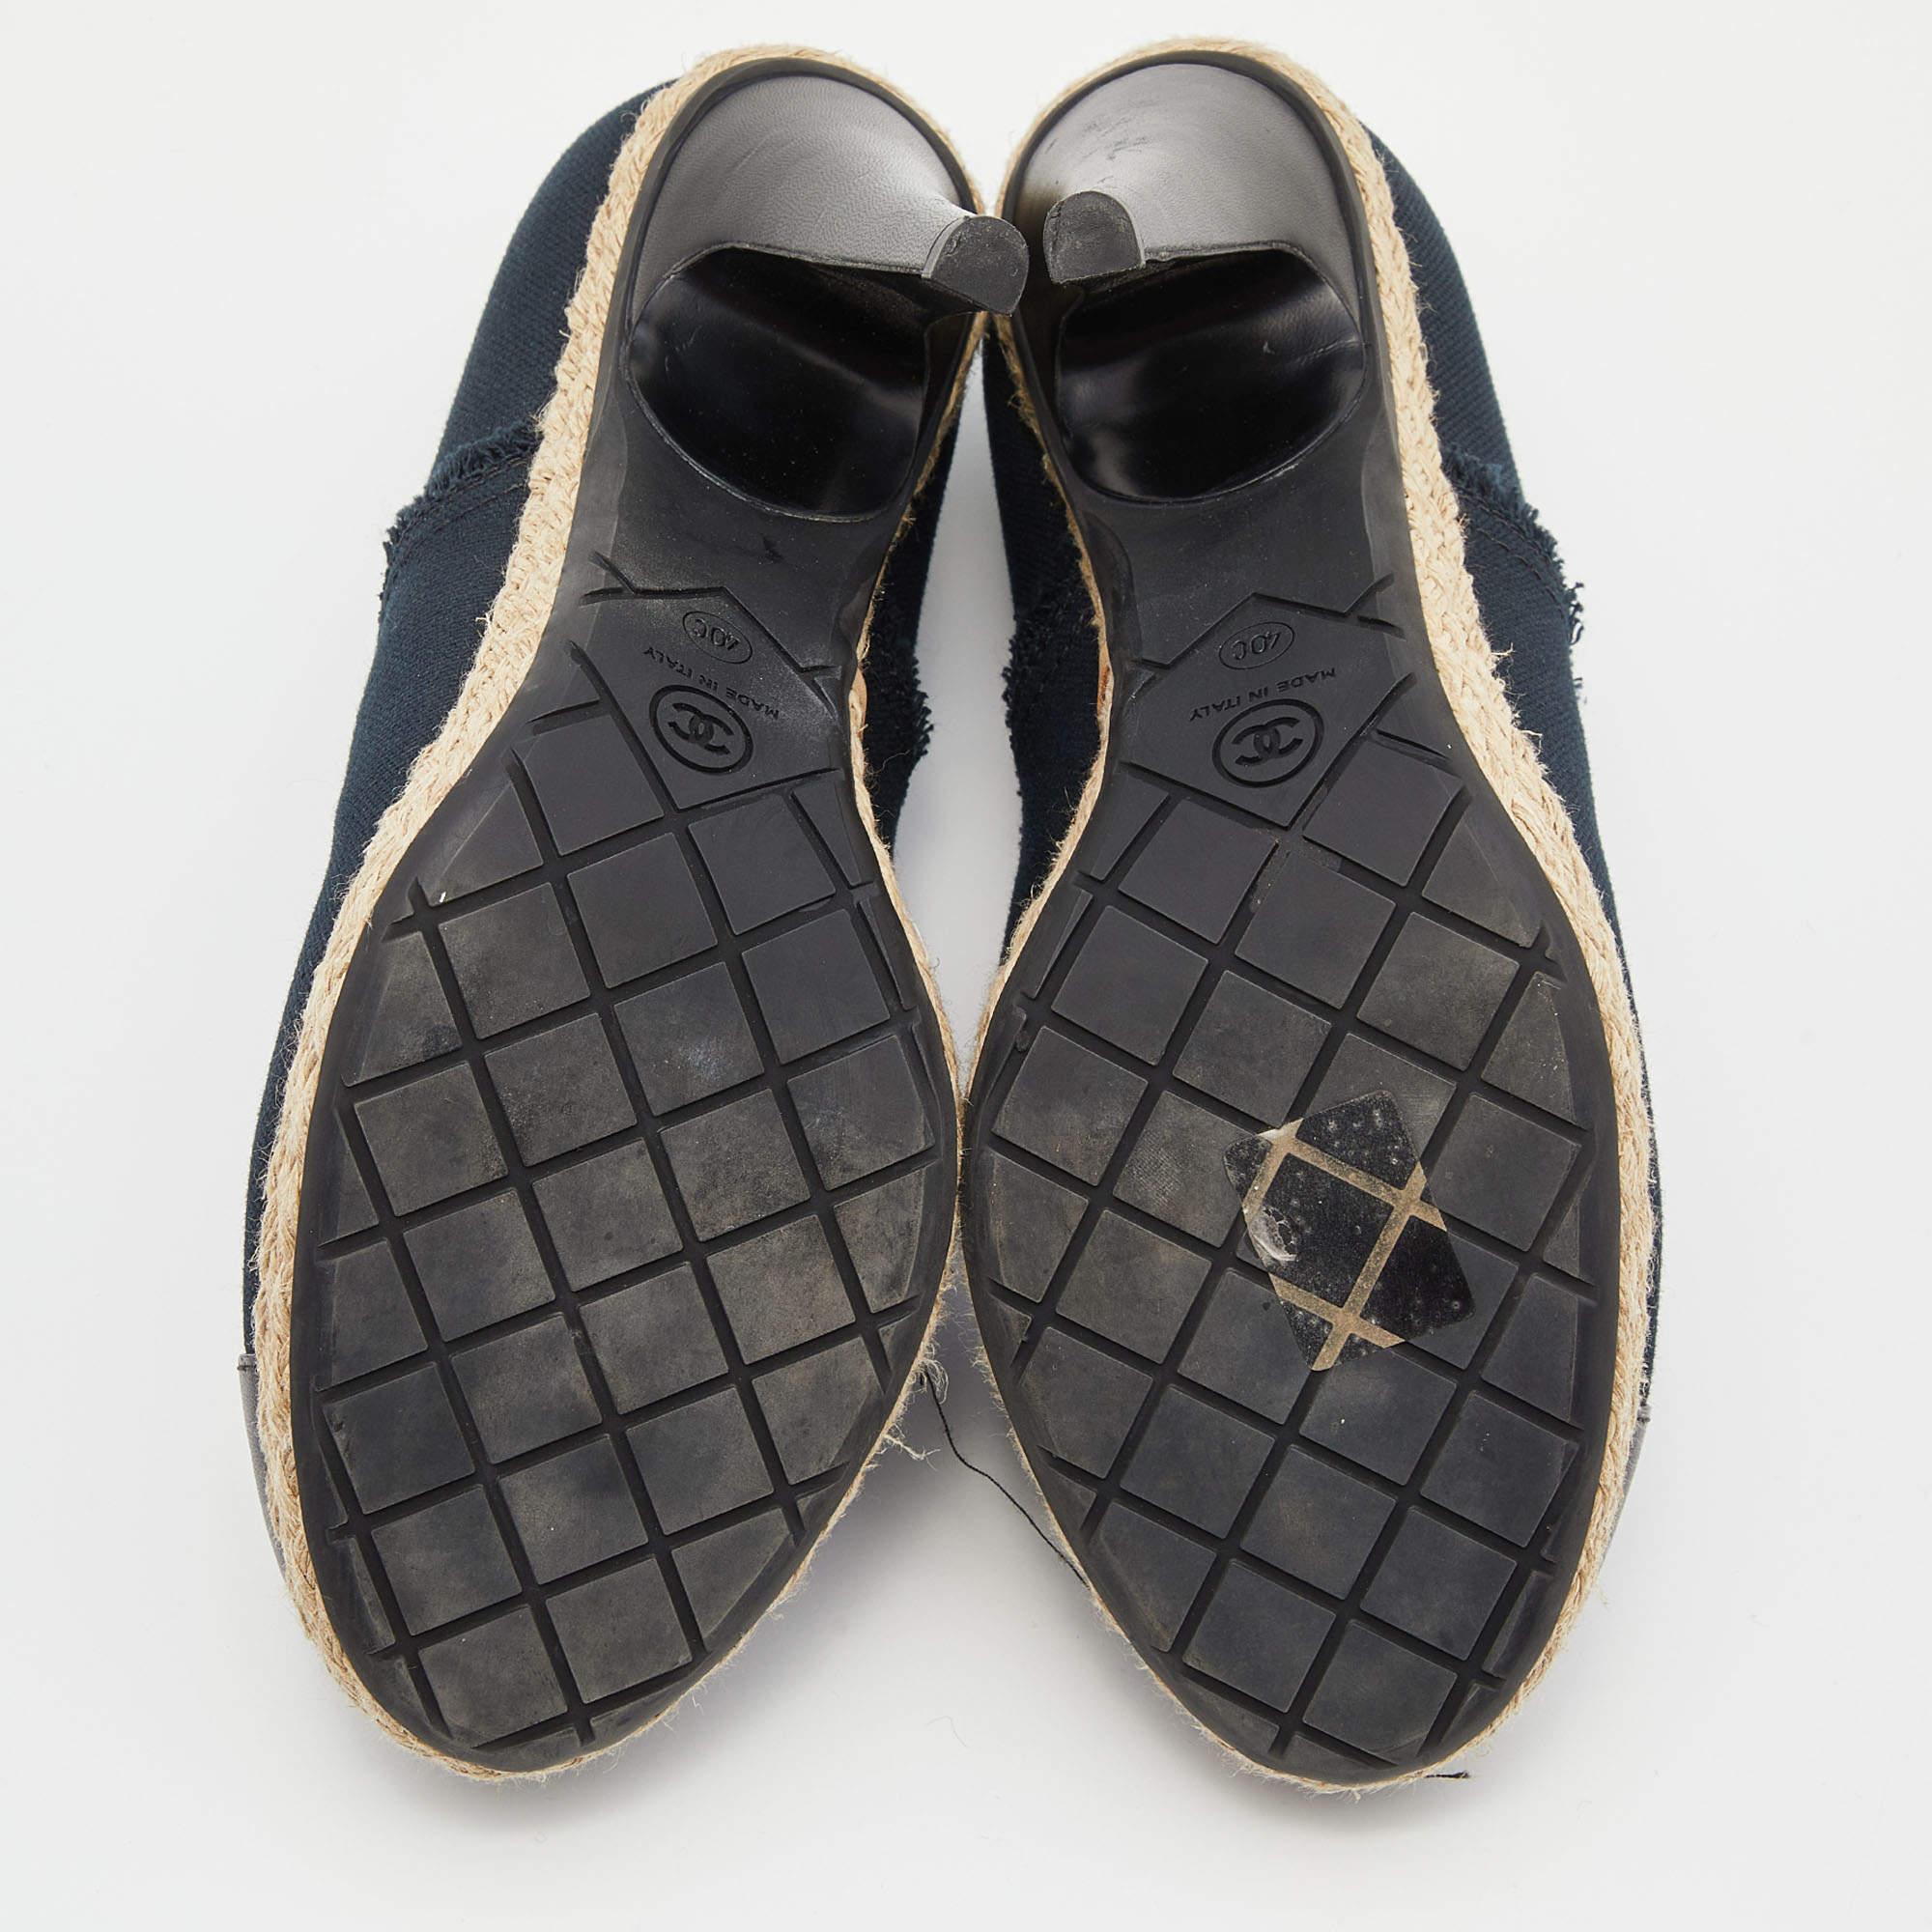 Chanel Dark Blue/Black Canvas and Leather Cap Toe Espadrilles Clogs Size 40 4